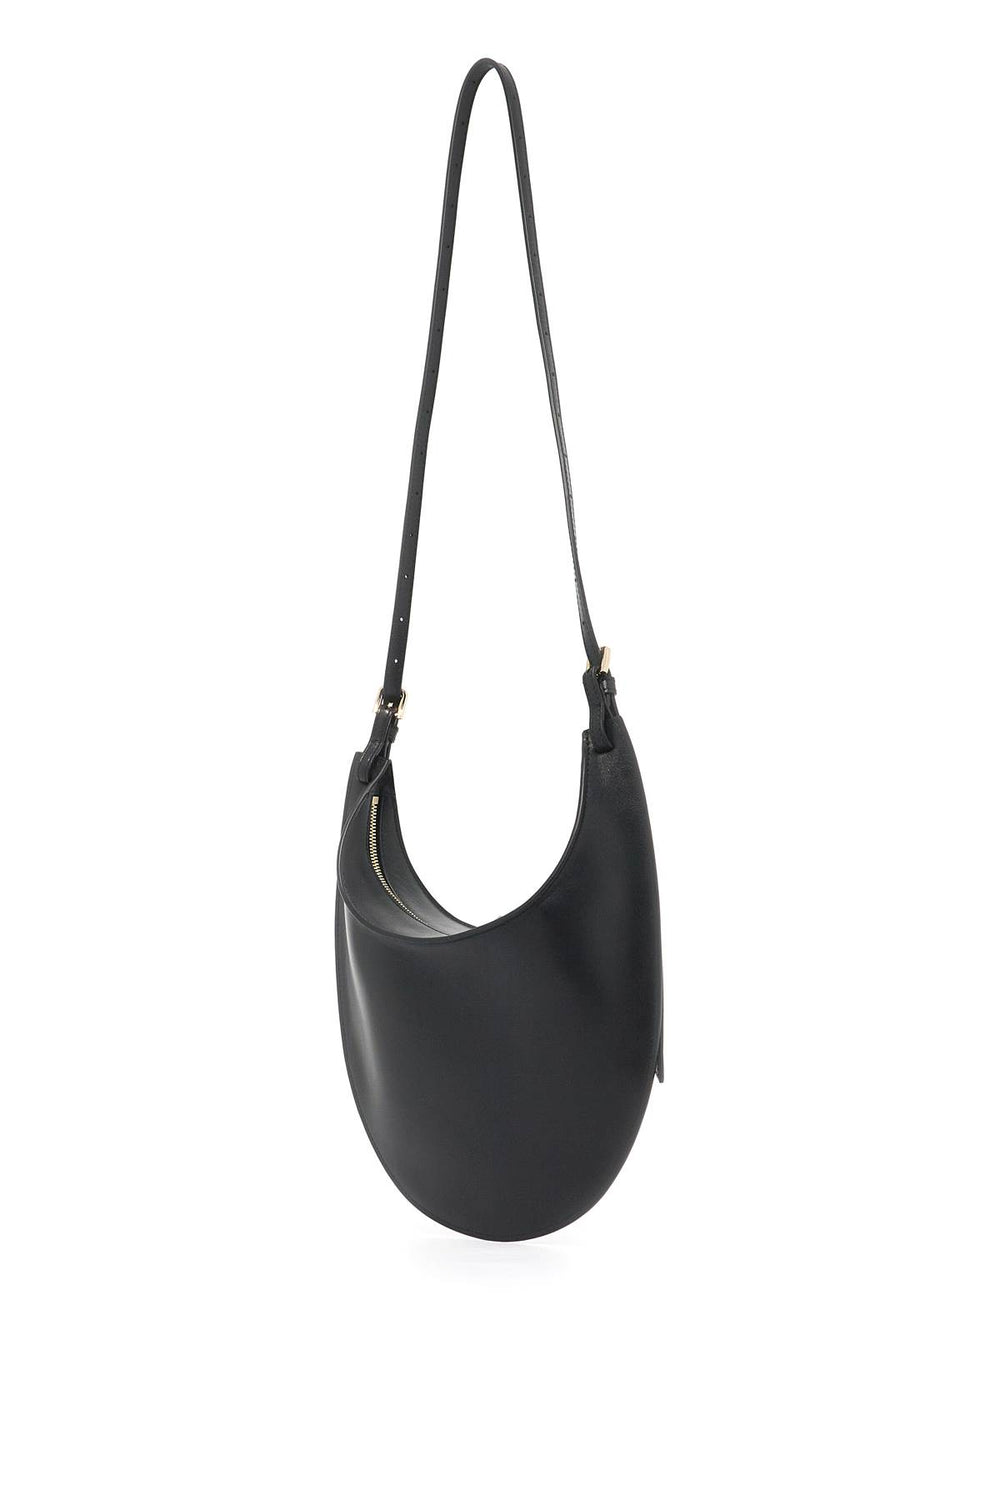 iris shoulder bag for women-1